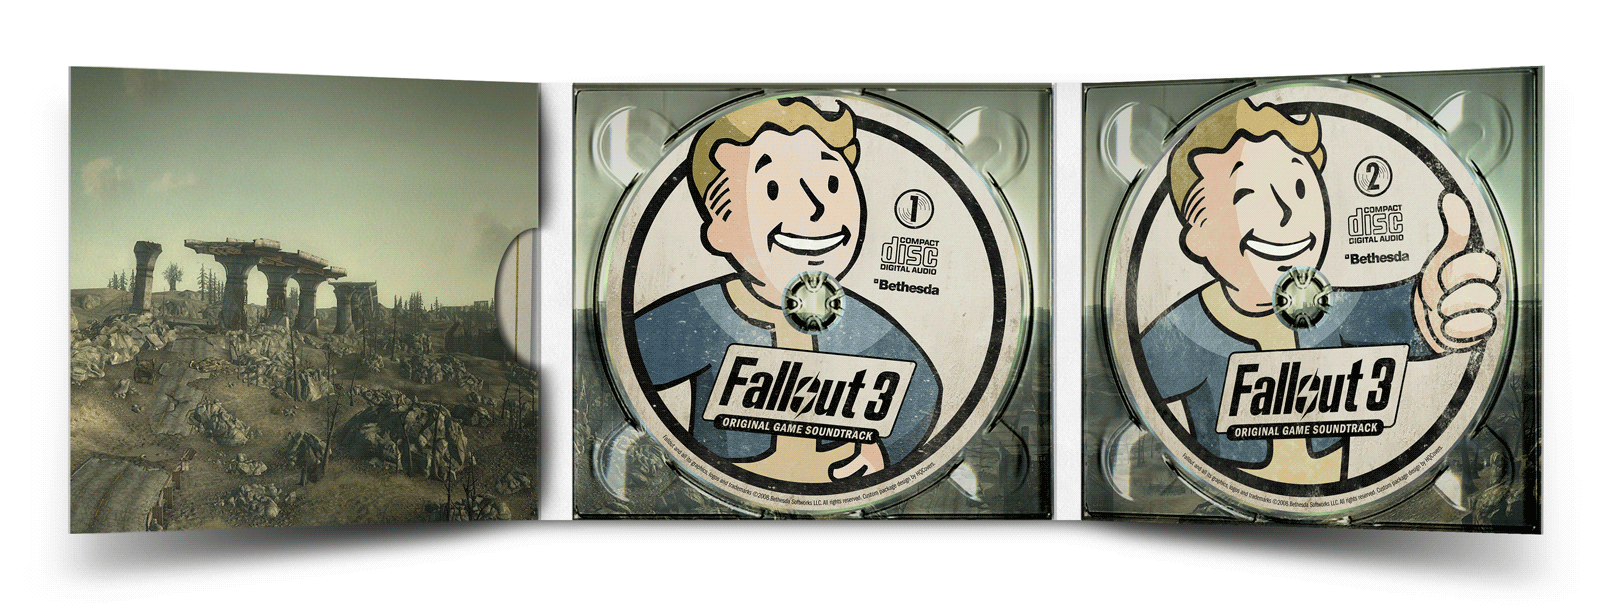 Original game is. Fallout Series обложка. Ядерный блок фоллаут. Fallout 3 OST. Таблички из игры Fallout.